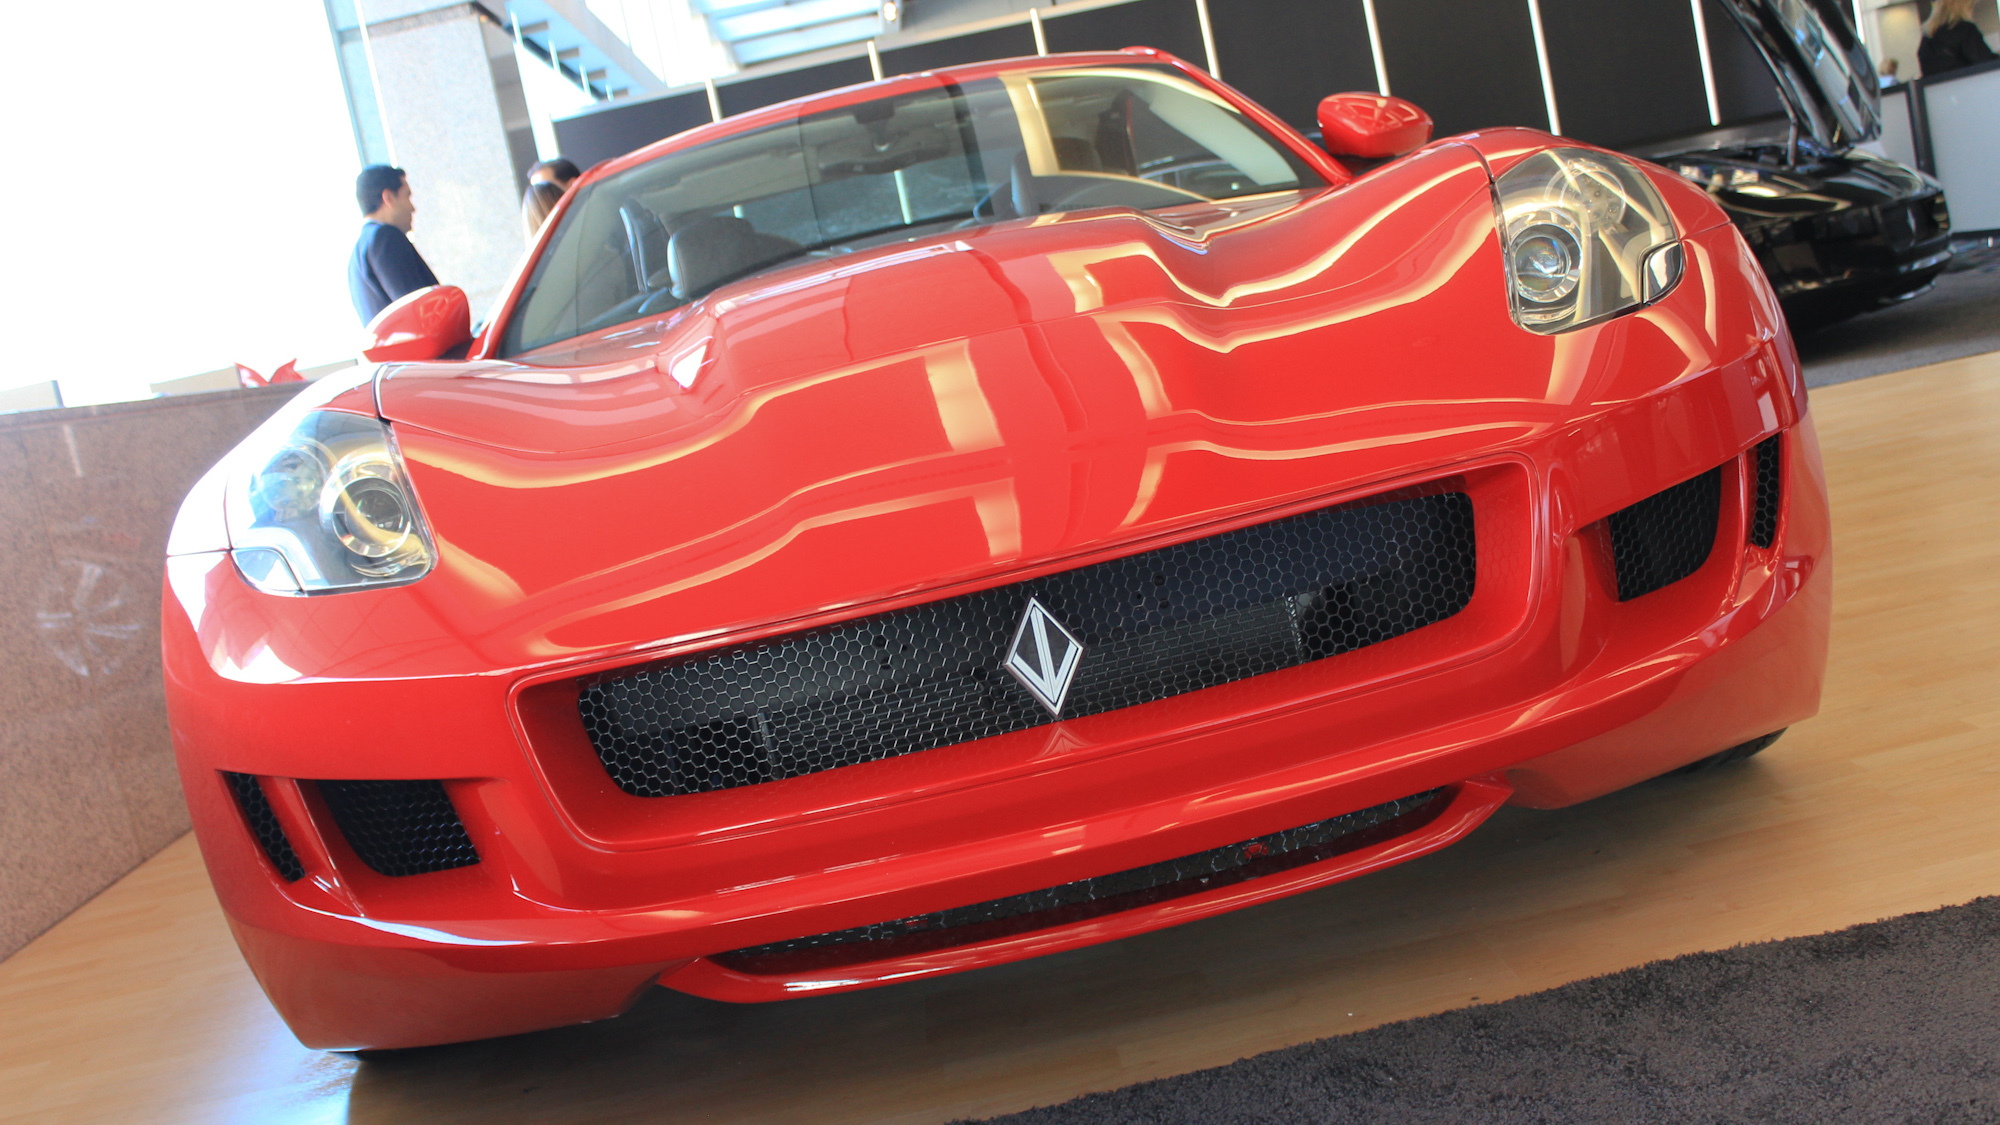 VL Destino Convertible live photos, 2014 Detroit Auto Show